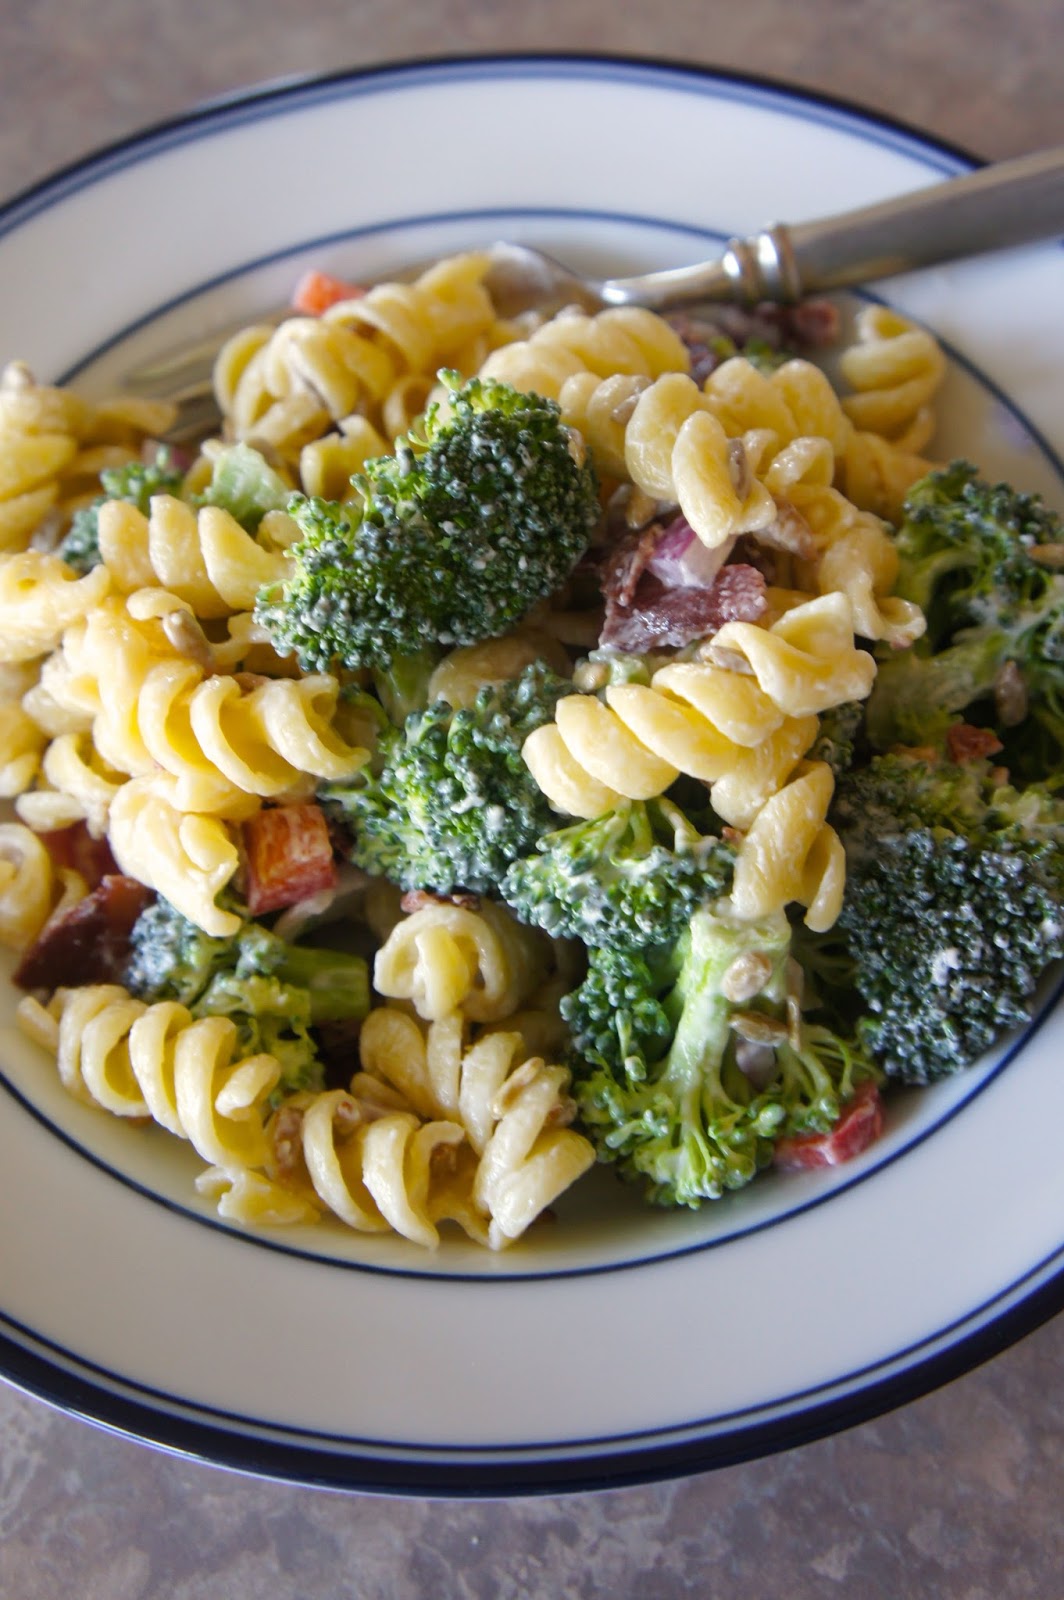 Savory Sweet and Satisfying: Broccoli Pasta Salad